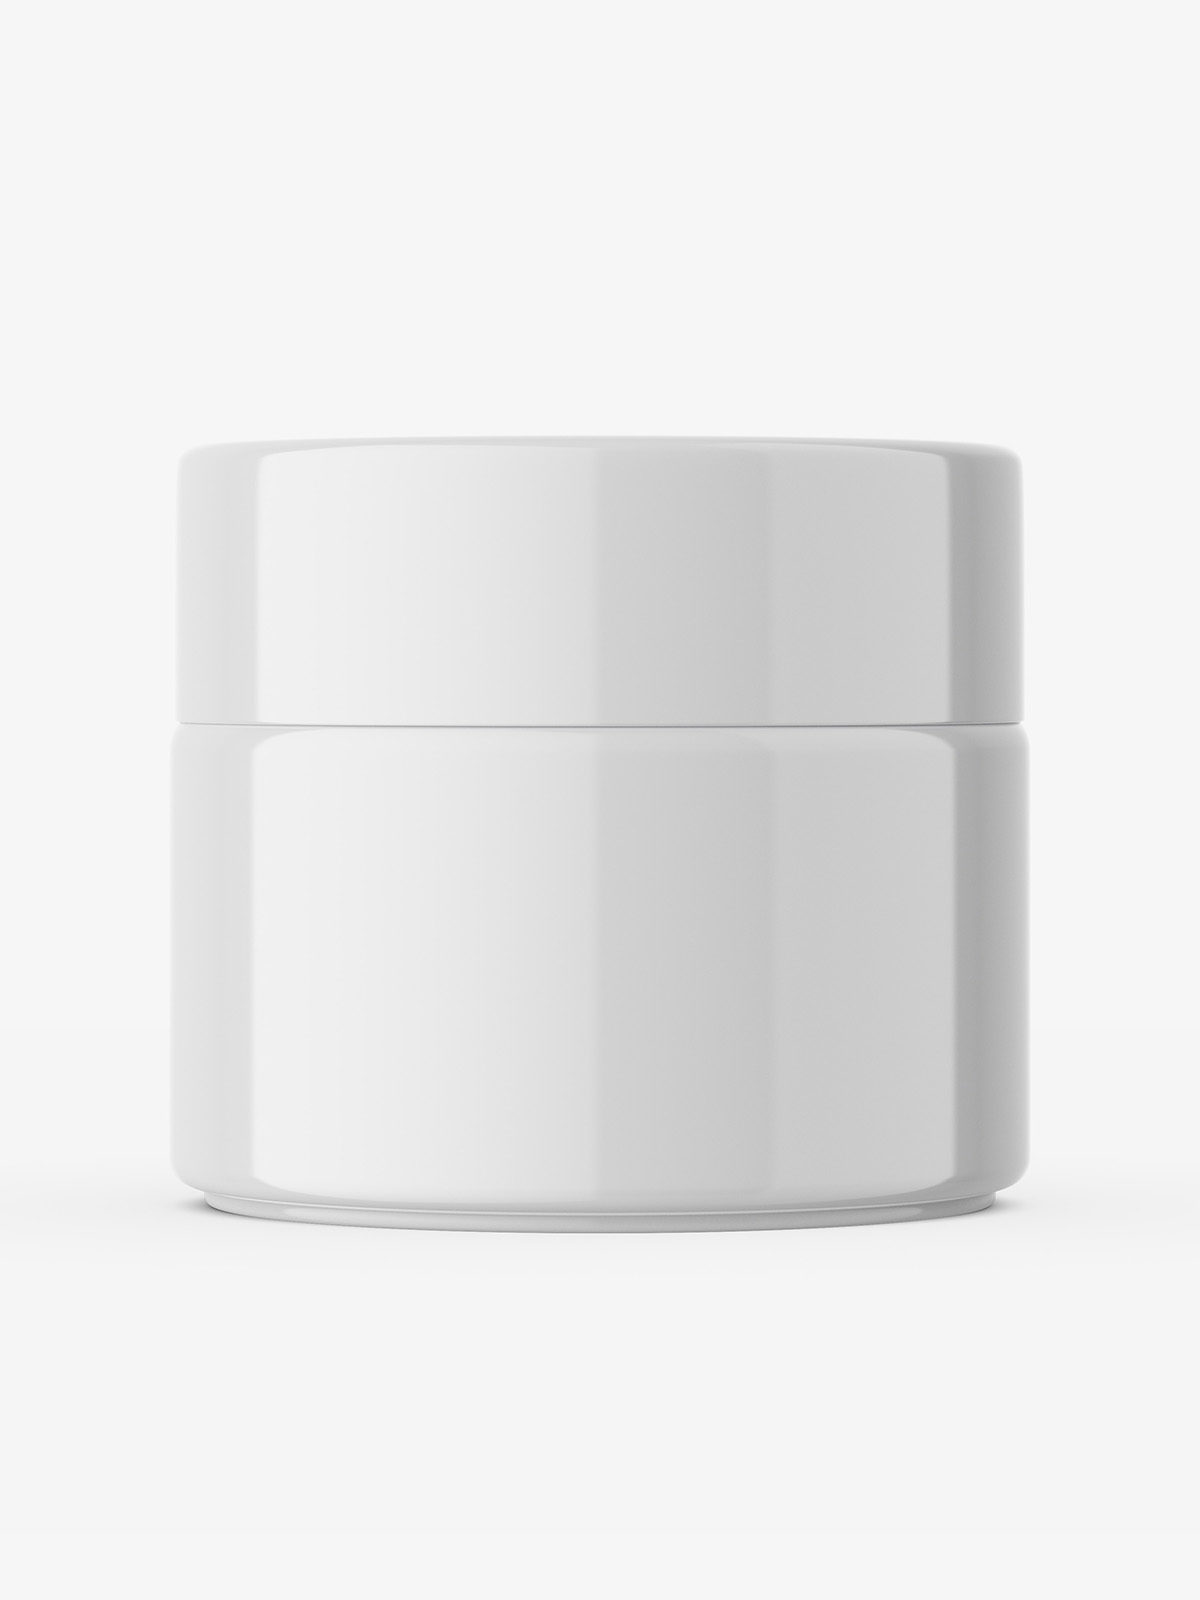 Download Cream jar mockup - Smarty Mockups